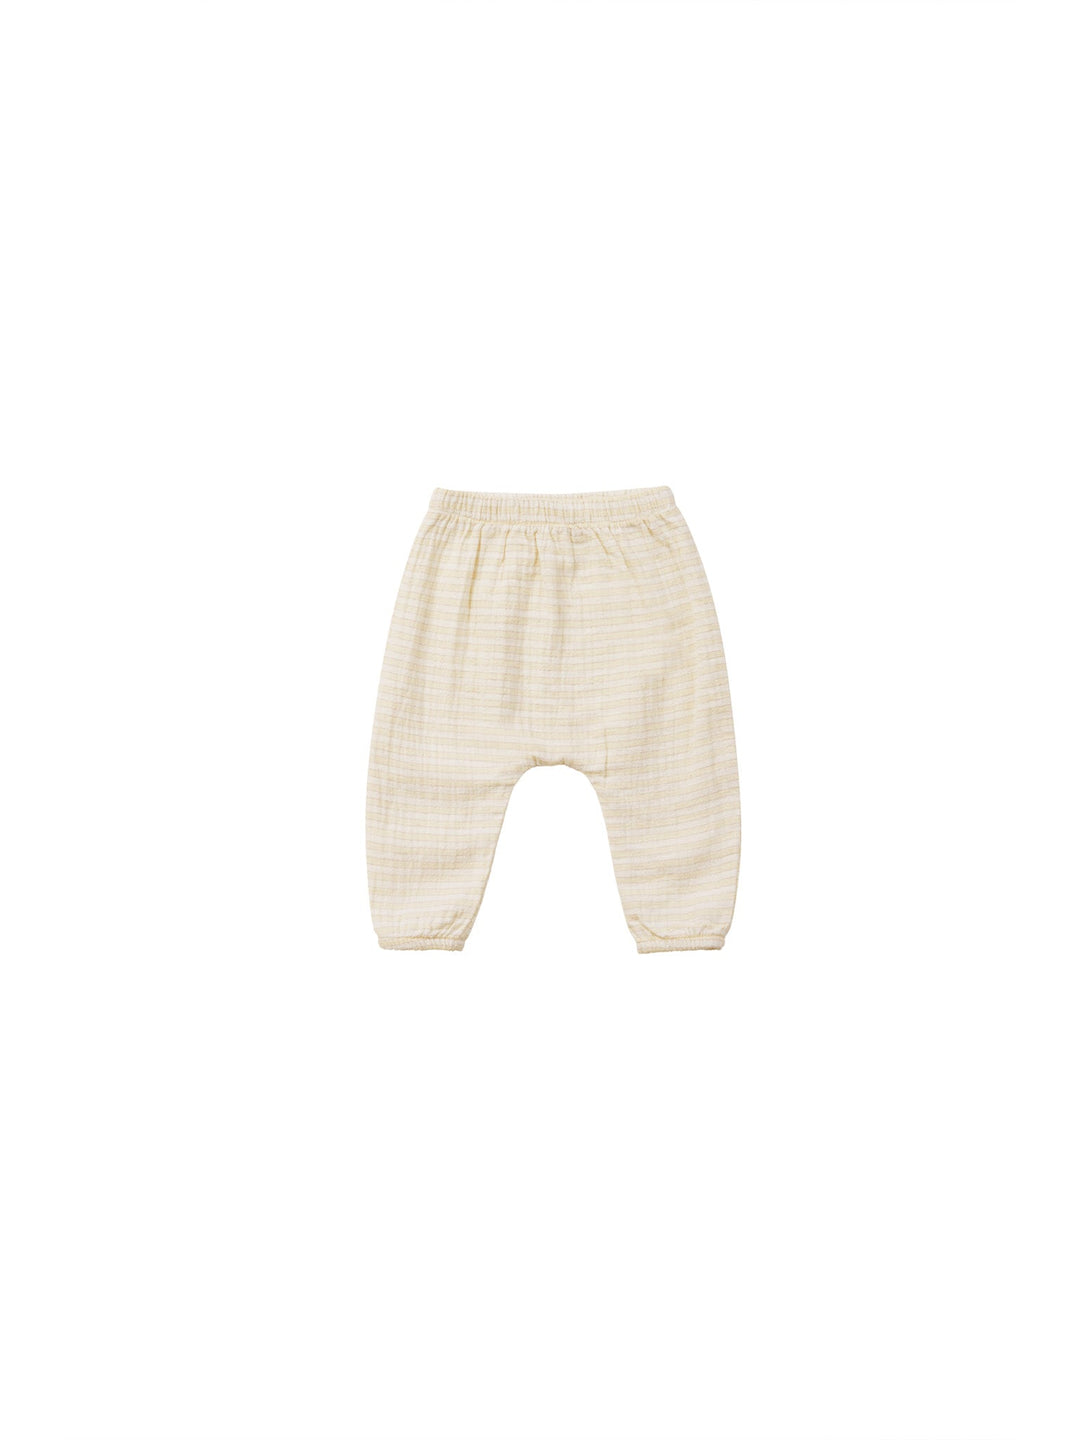 Quincy Mae Pants 0-3m Woven Pant - Lemon Stripe